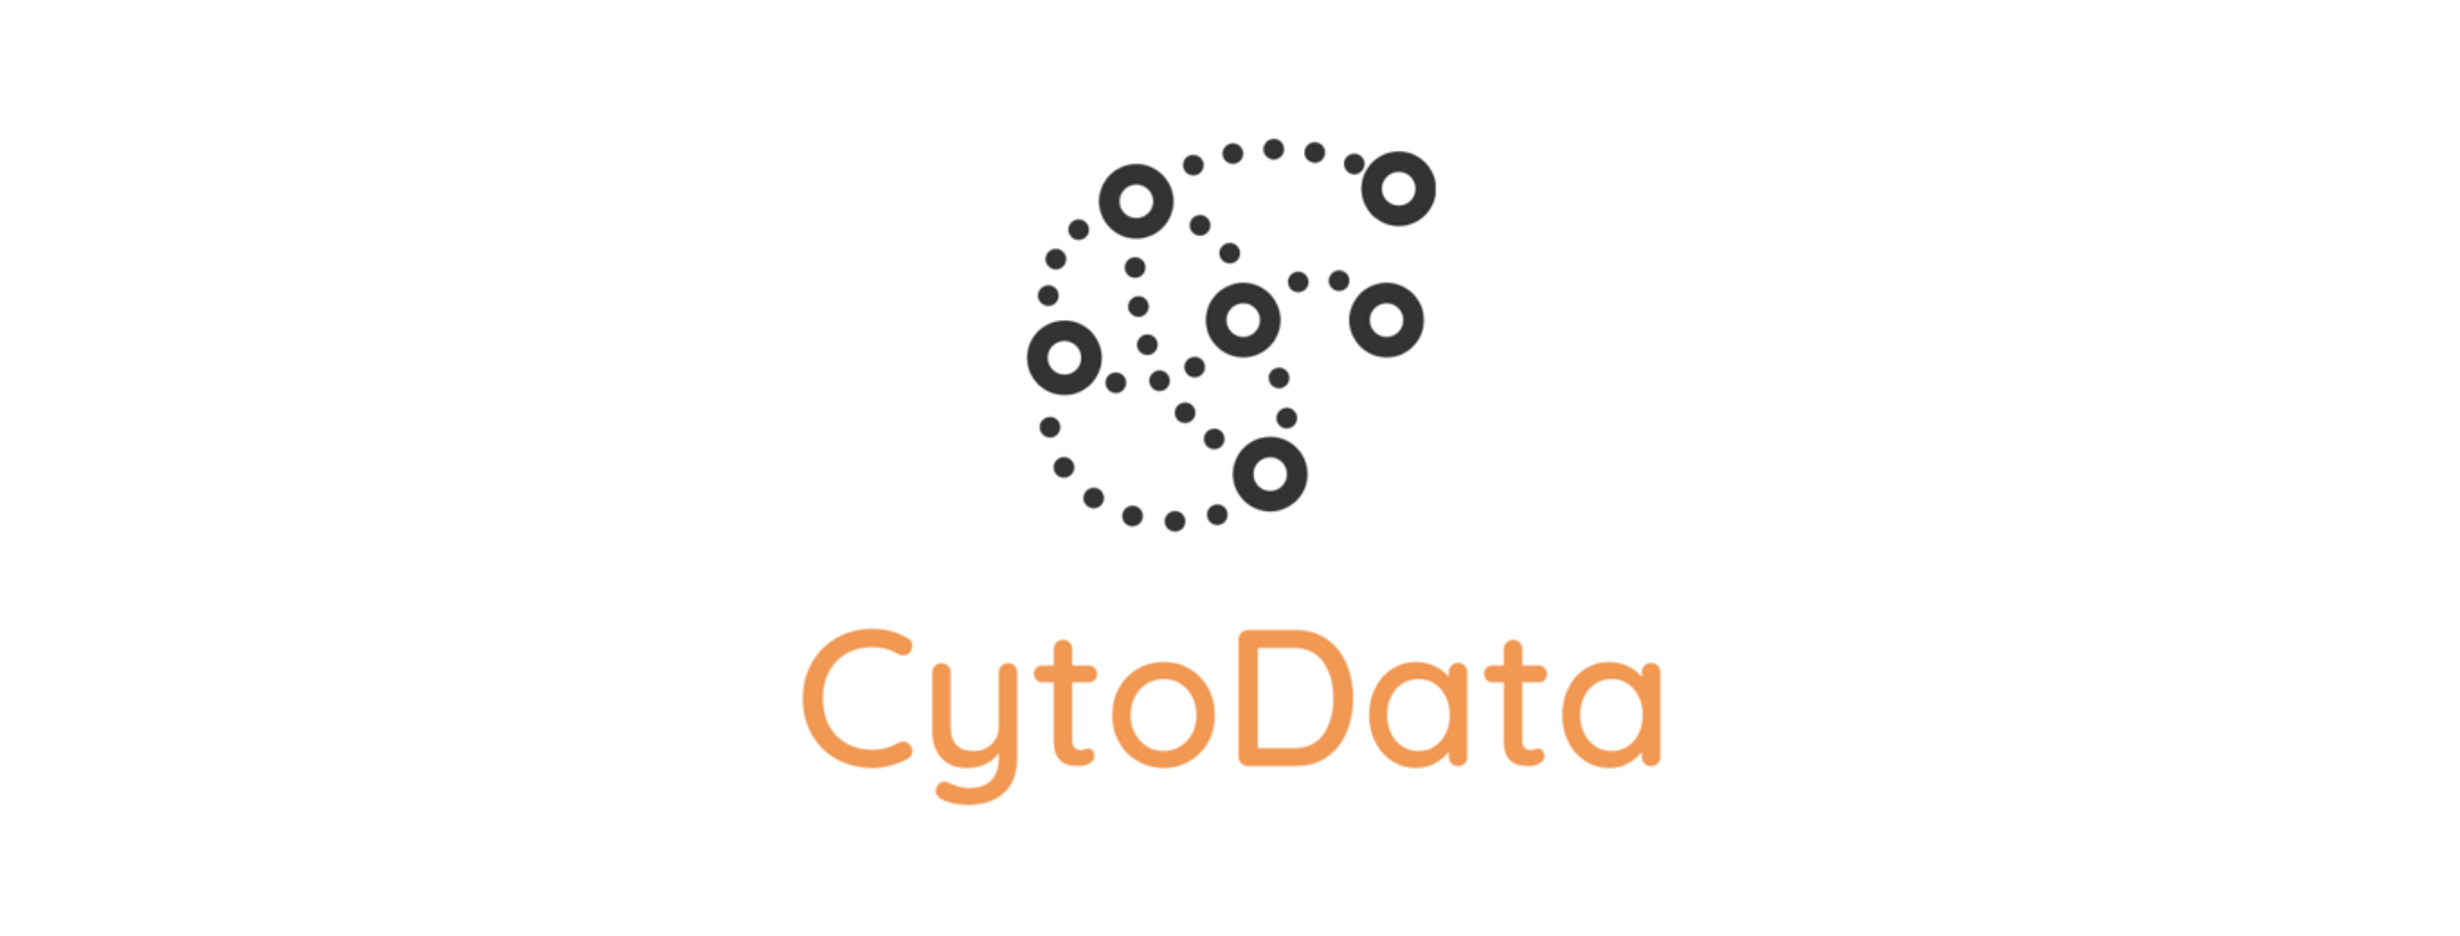 cytodata-logo.png